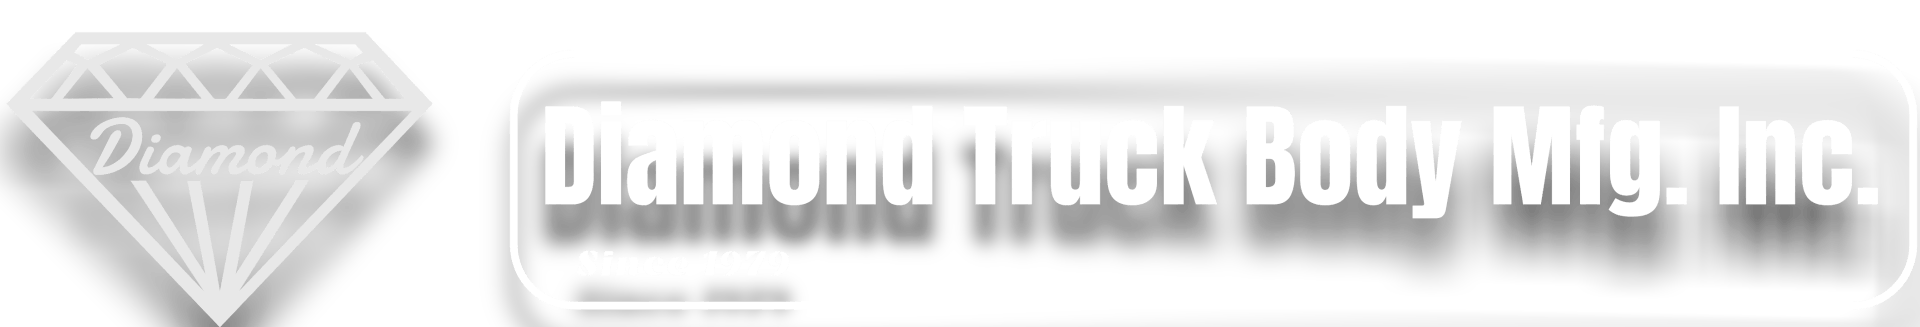 Diamond Truck Body Manufacturing Inc.